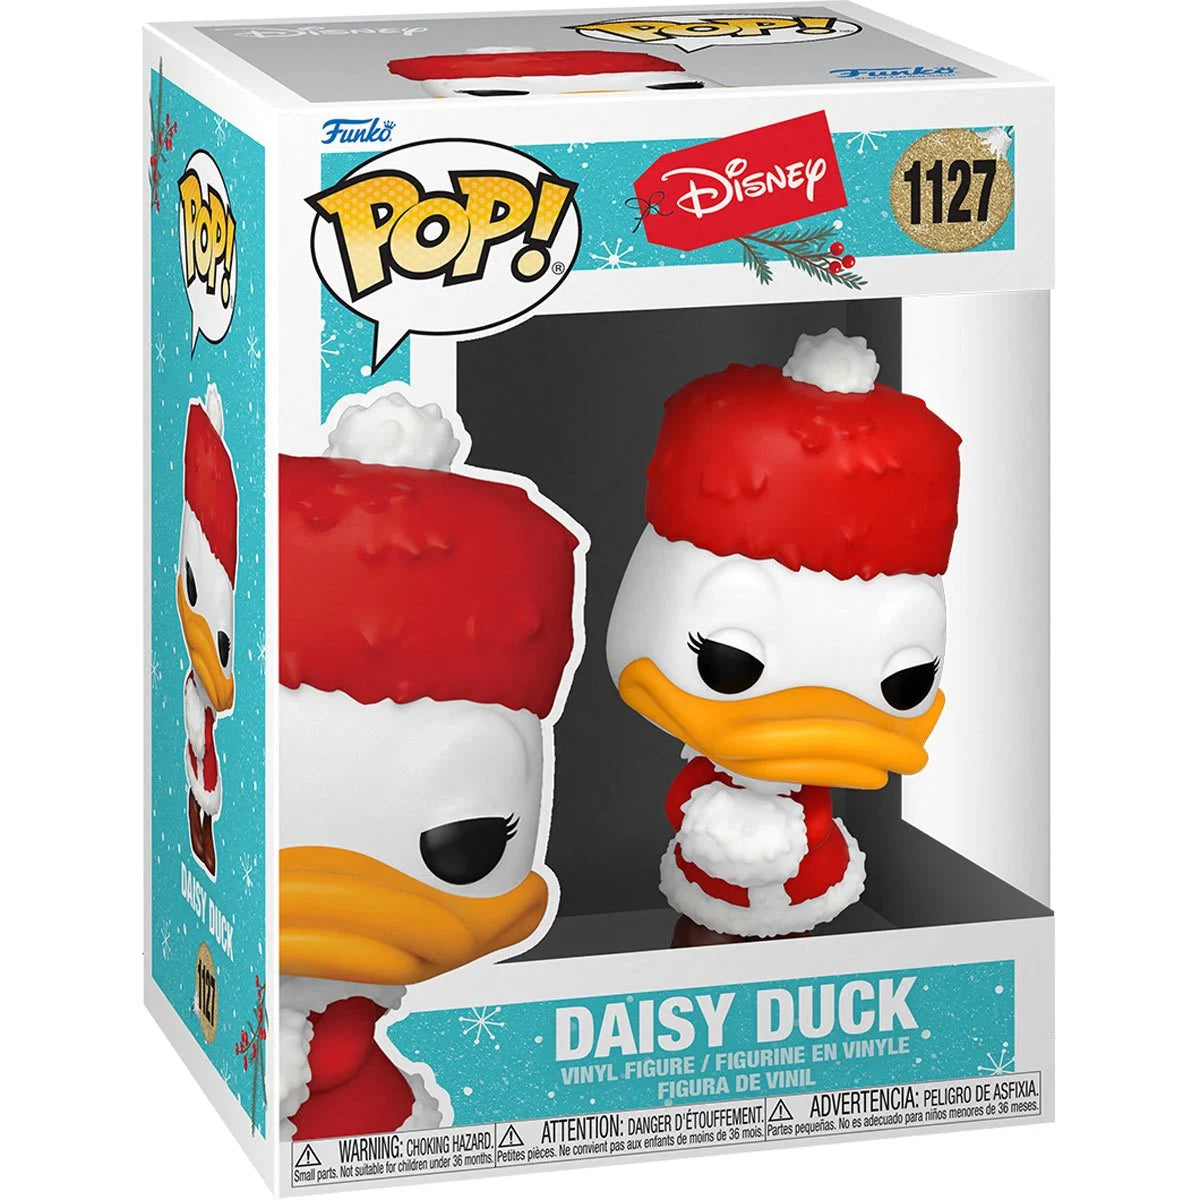 Disney Holiday Daisy Duck Pop! Vinyl Figure